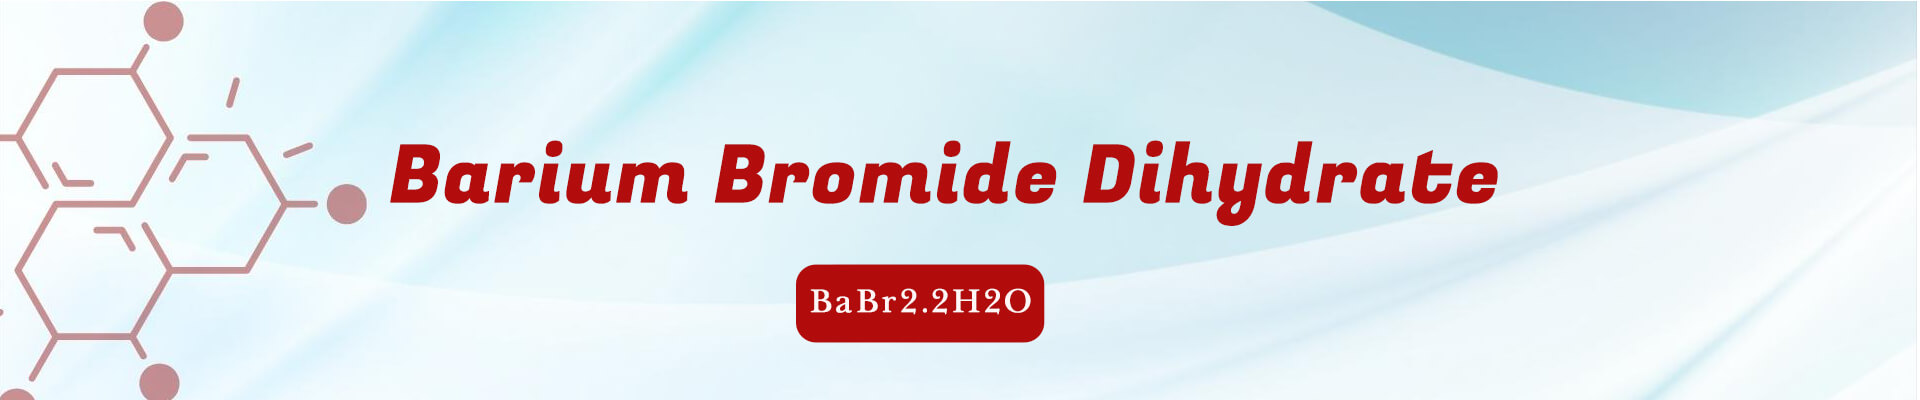 Barium Bromide Dihydrate